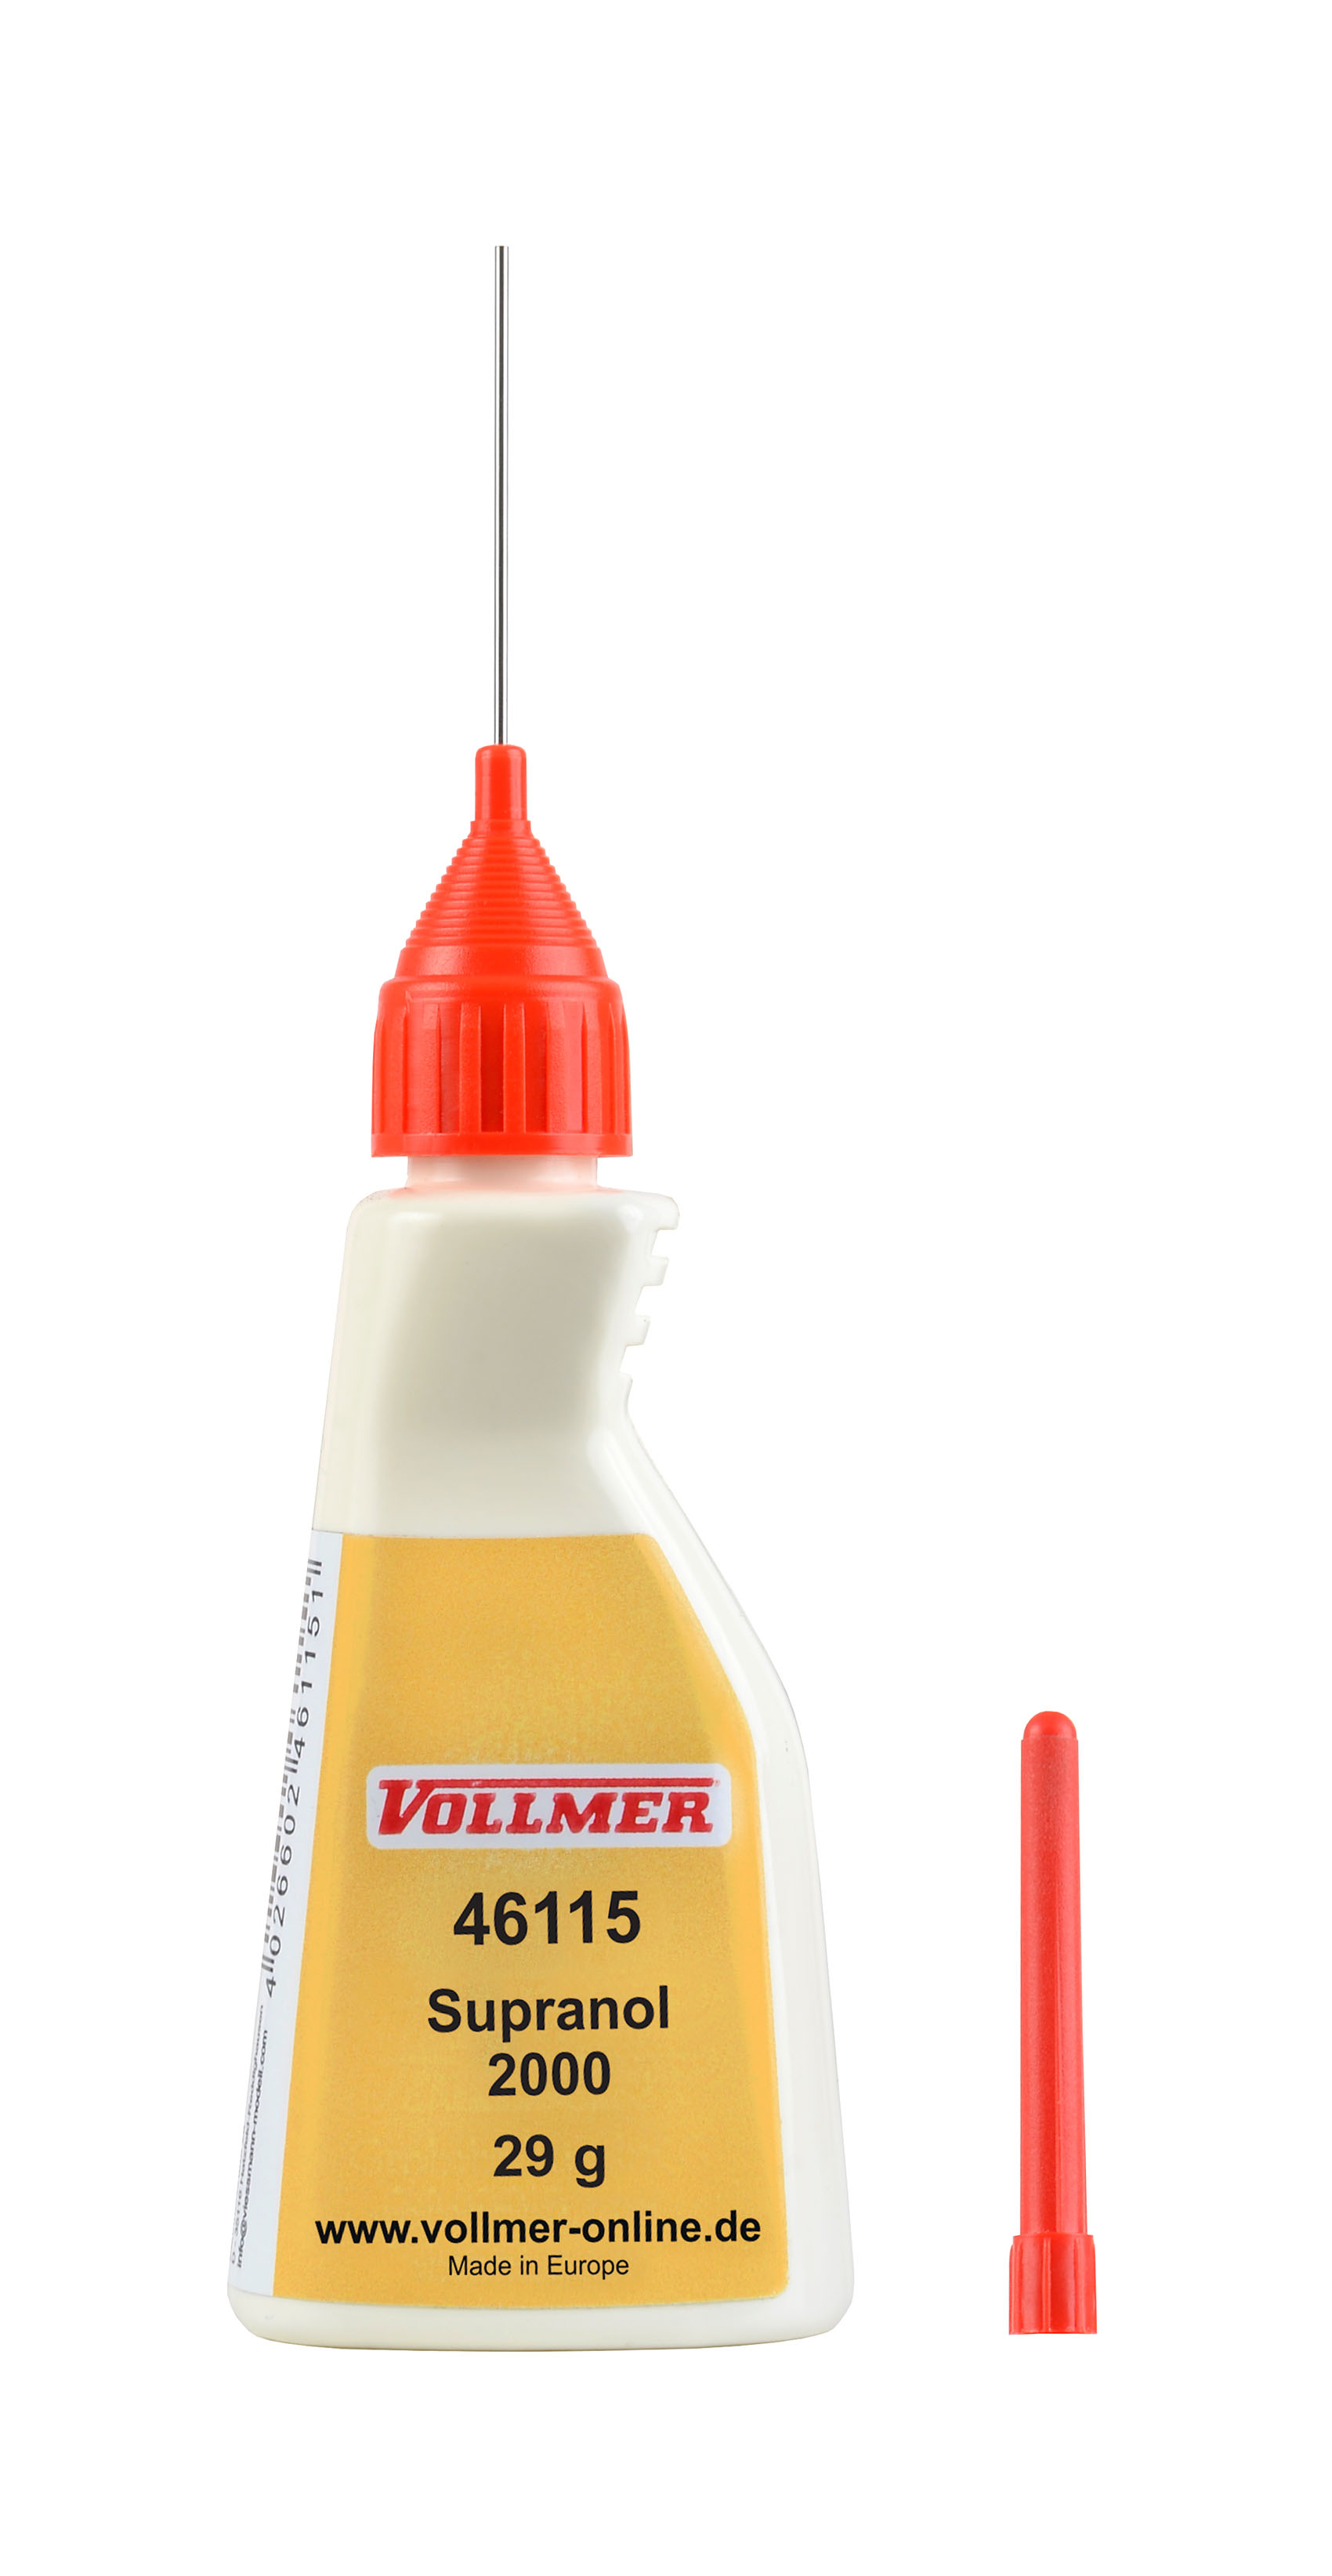 Vollmer Supranol 2000, 33 ml - 46115